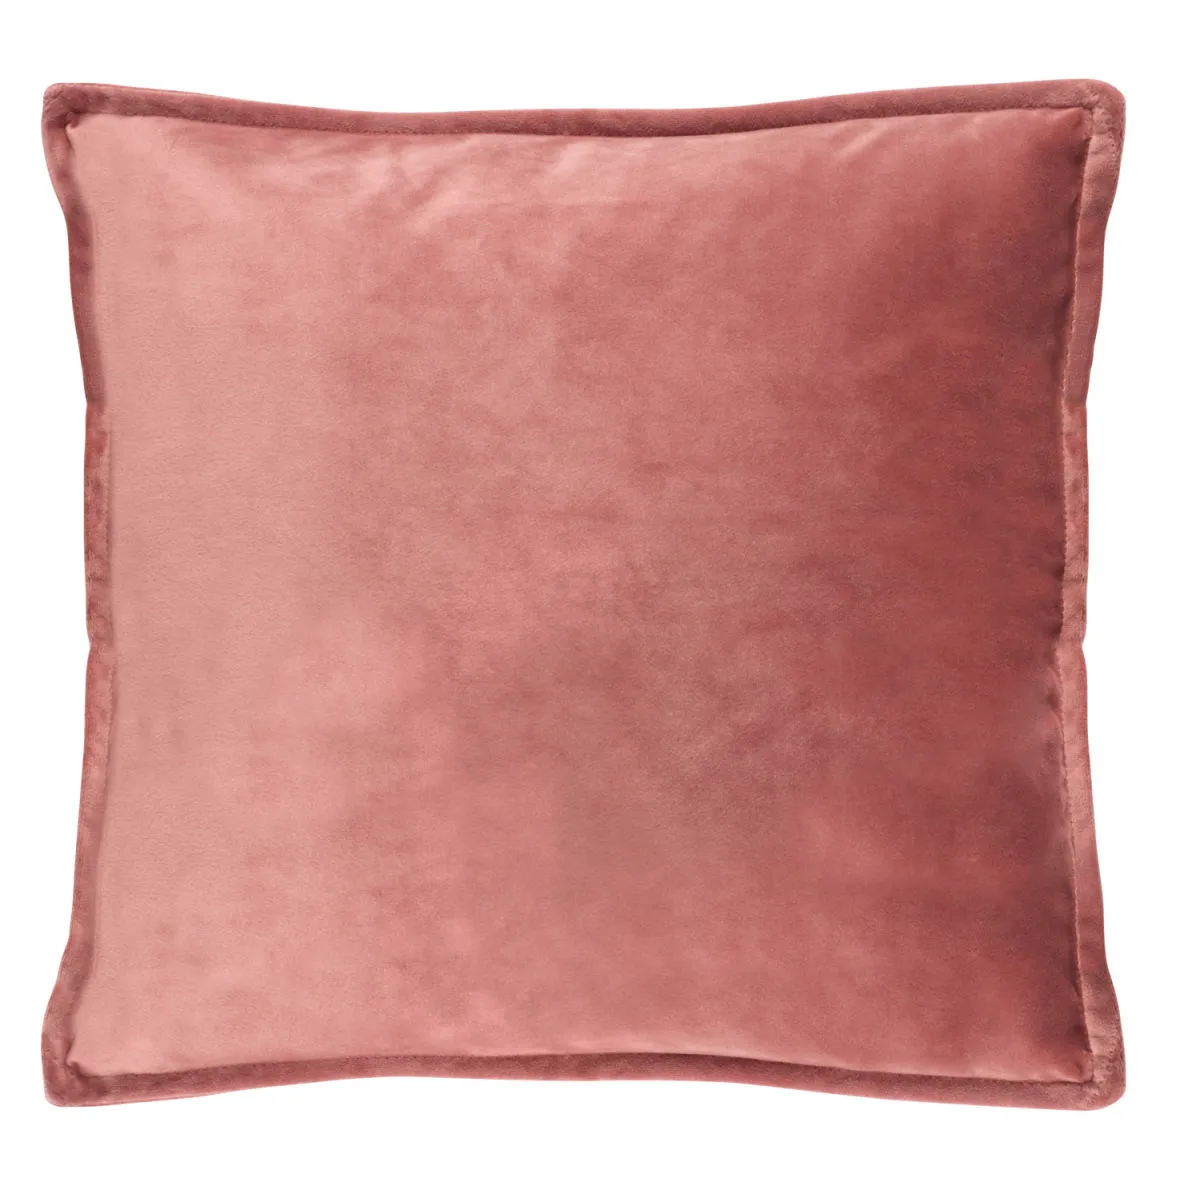 Federa cuscino in velluto Samara ; 50x50 cm (LxL); rosa antico; quadrata